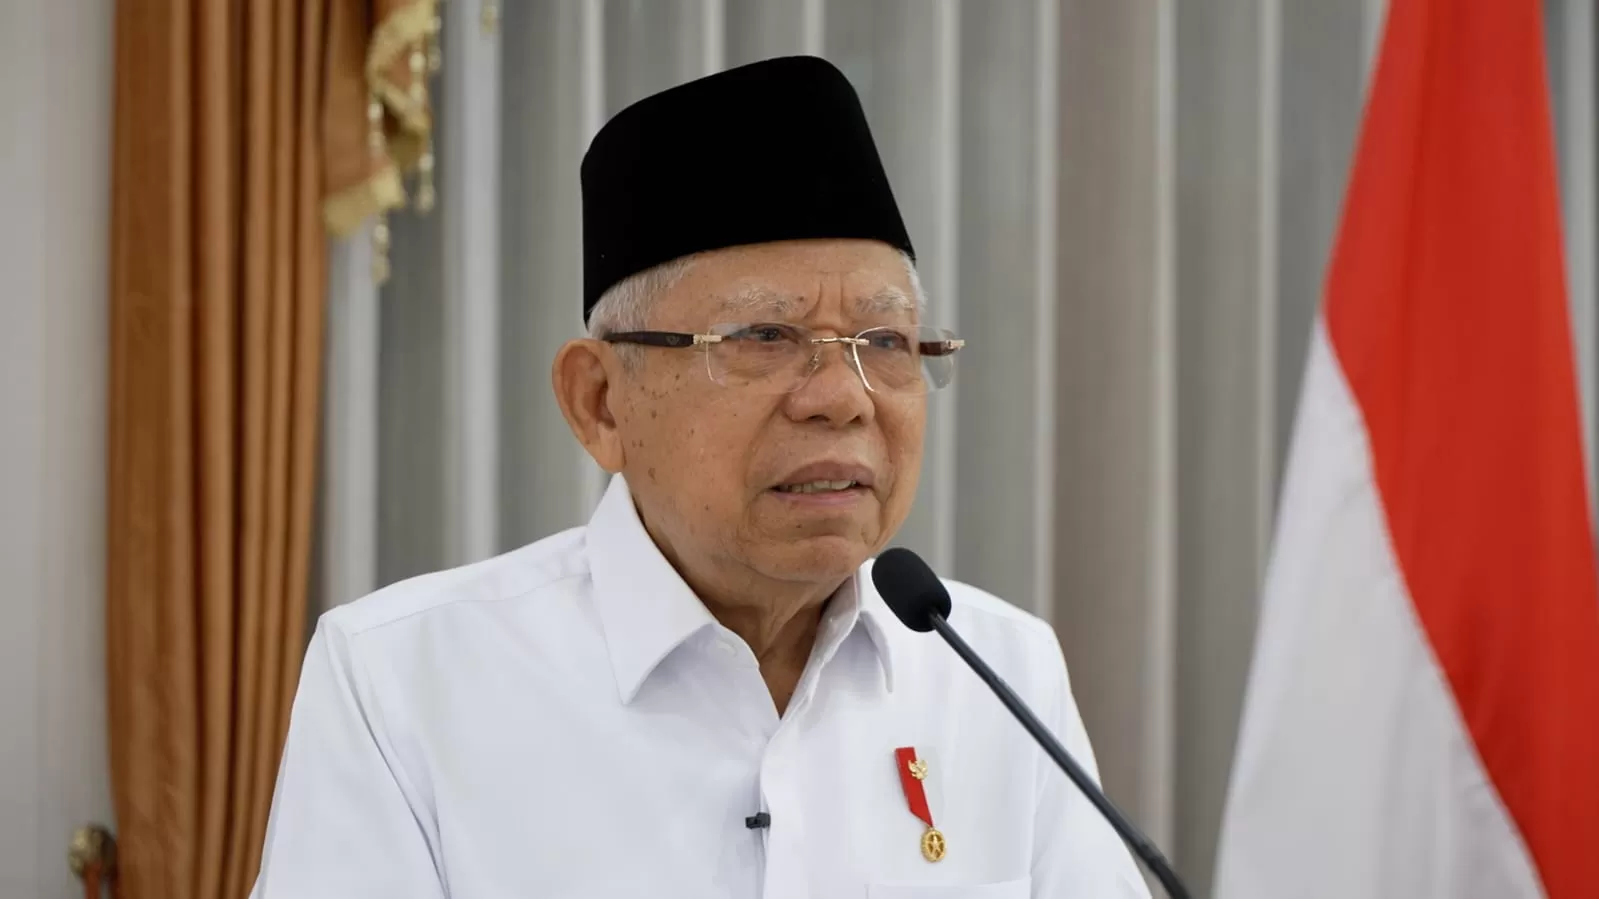 Wakil Presiden Ma'ruf Amin menghadiri acara halal bi halal bersama Pekerja Migran Indonesia (PMI) secara virtual, Minggu (5/5). (Humas Setwapres)